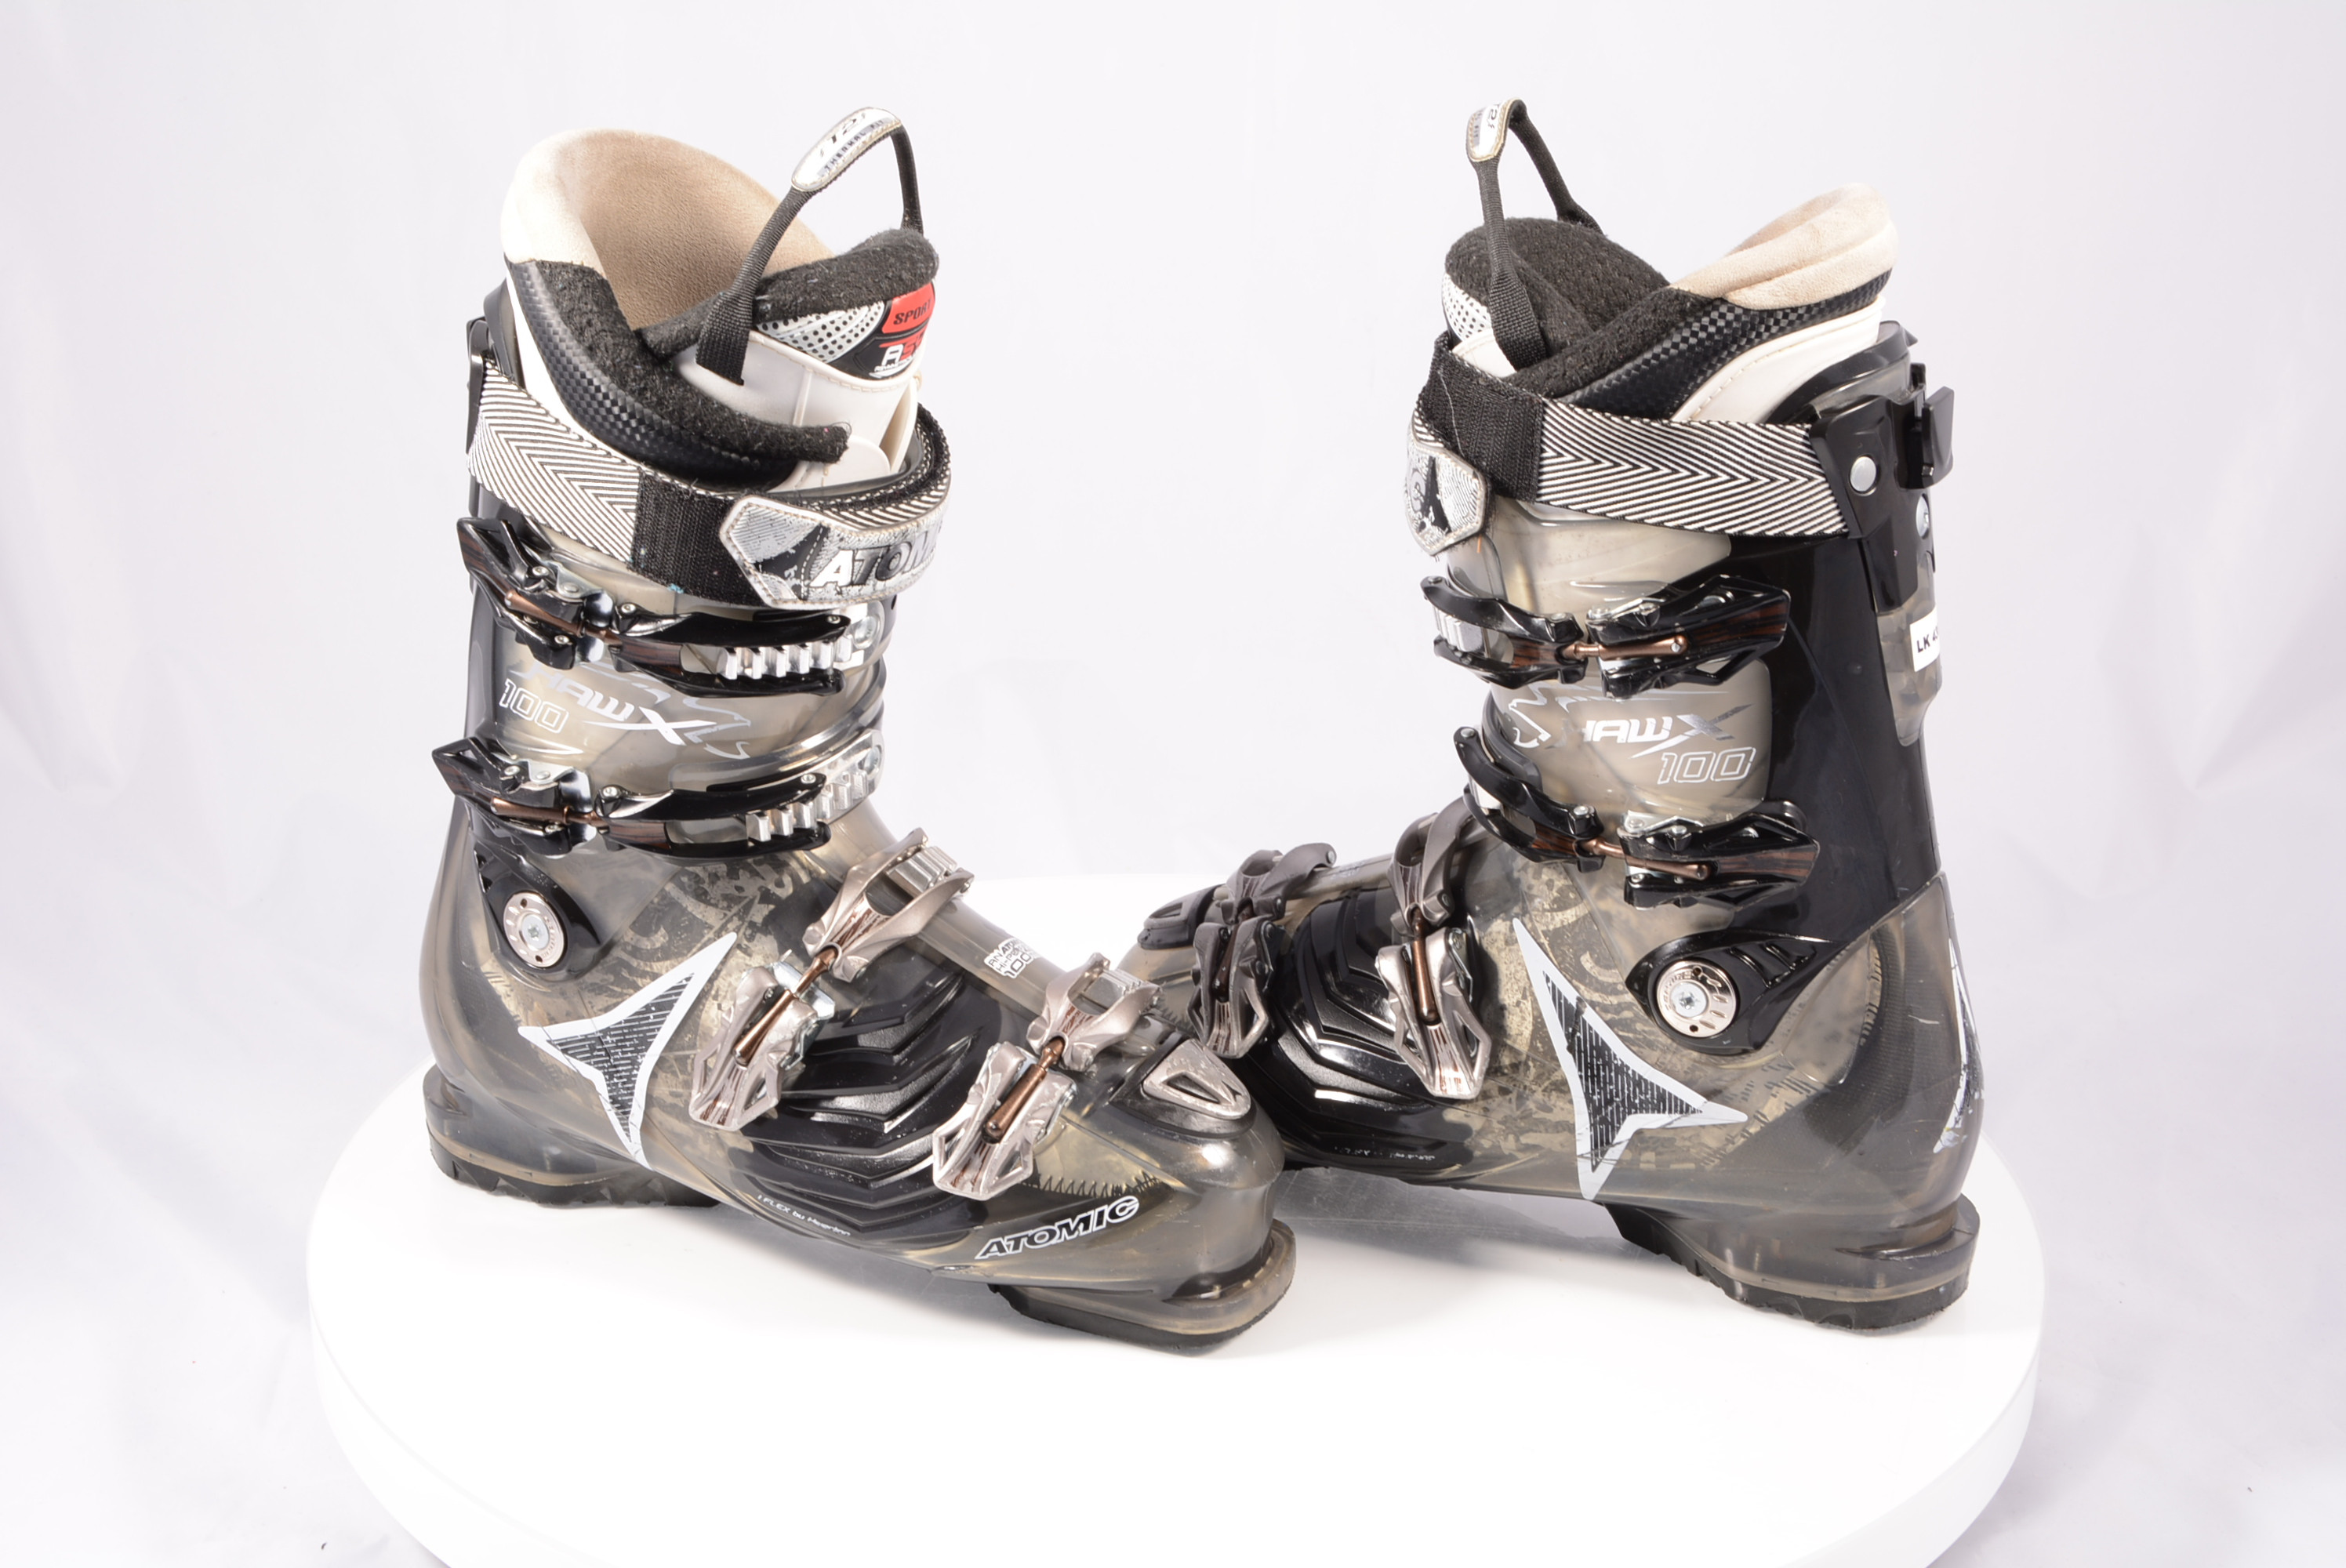 ski boots HAWX 100 GREY/trans, Thermal fit T2, Sport ASY, Anatomic Hi-perf fit, Canting, Recco, micro, - Mardosport.com